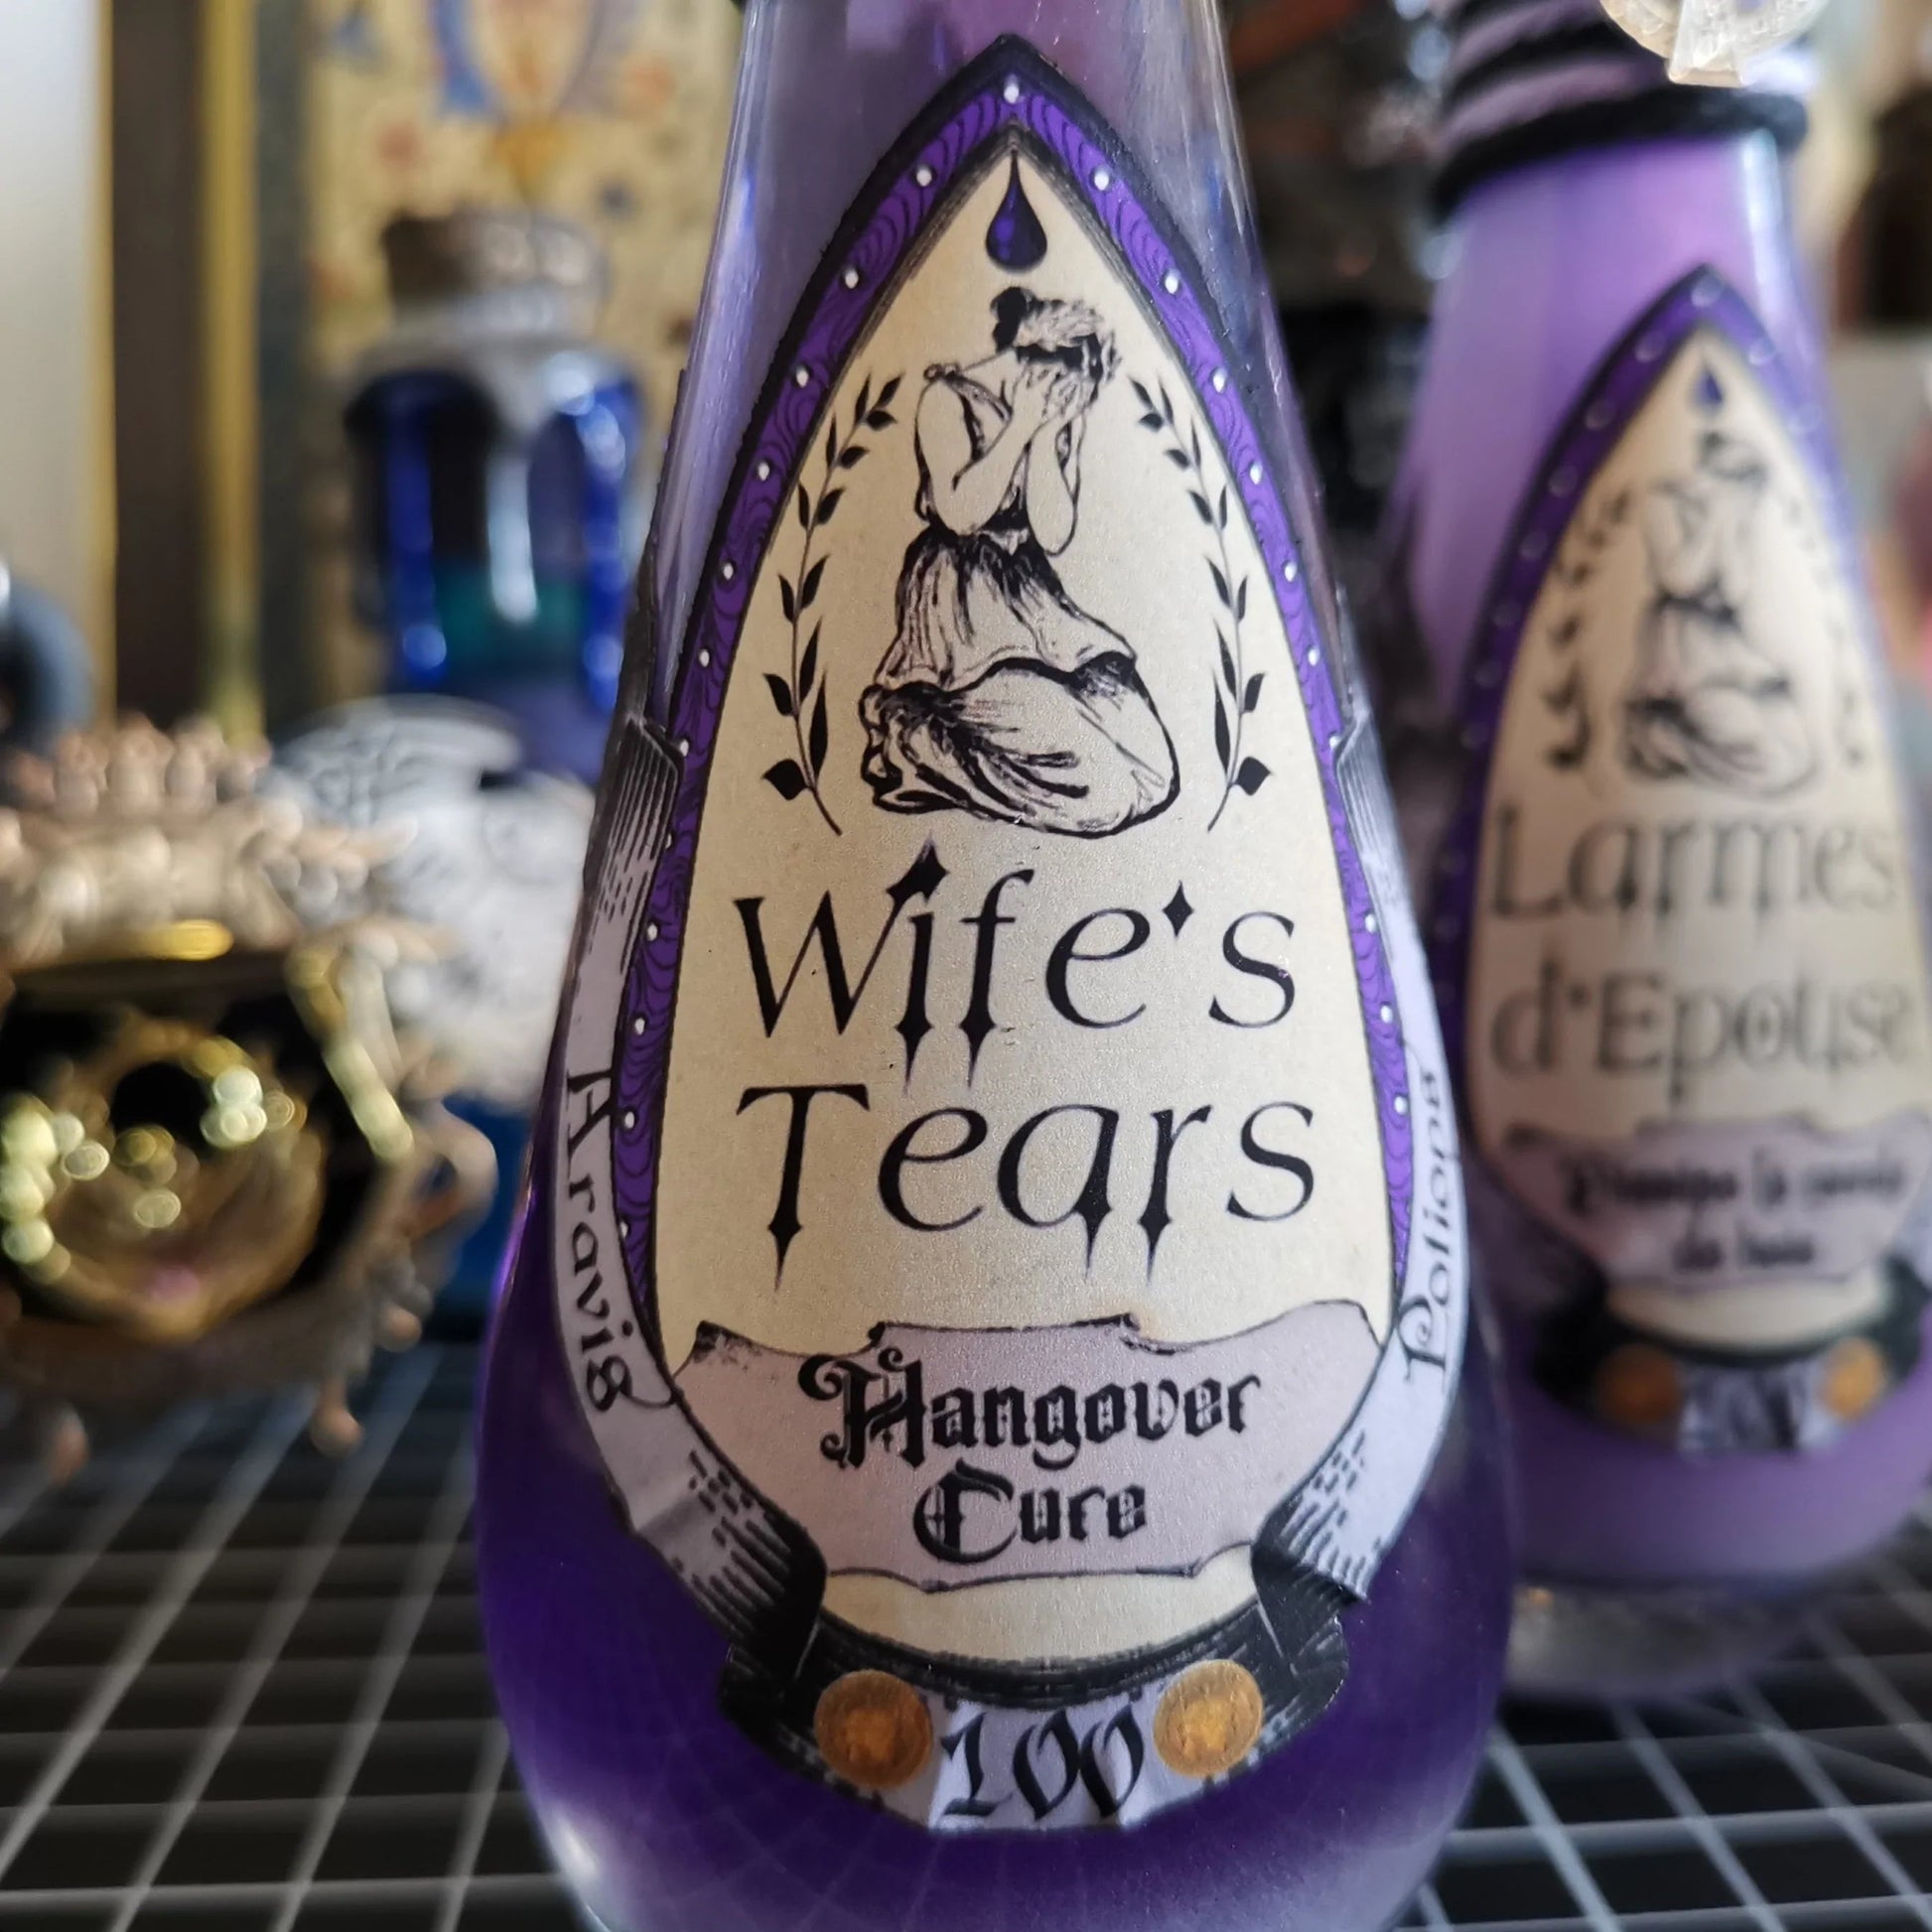 Larmes d'epouse - Wife's Tears Aravis Potions Apothecary Harry Potter